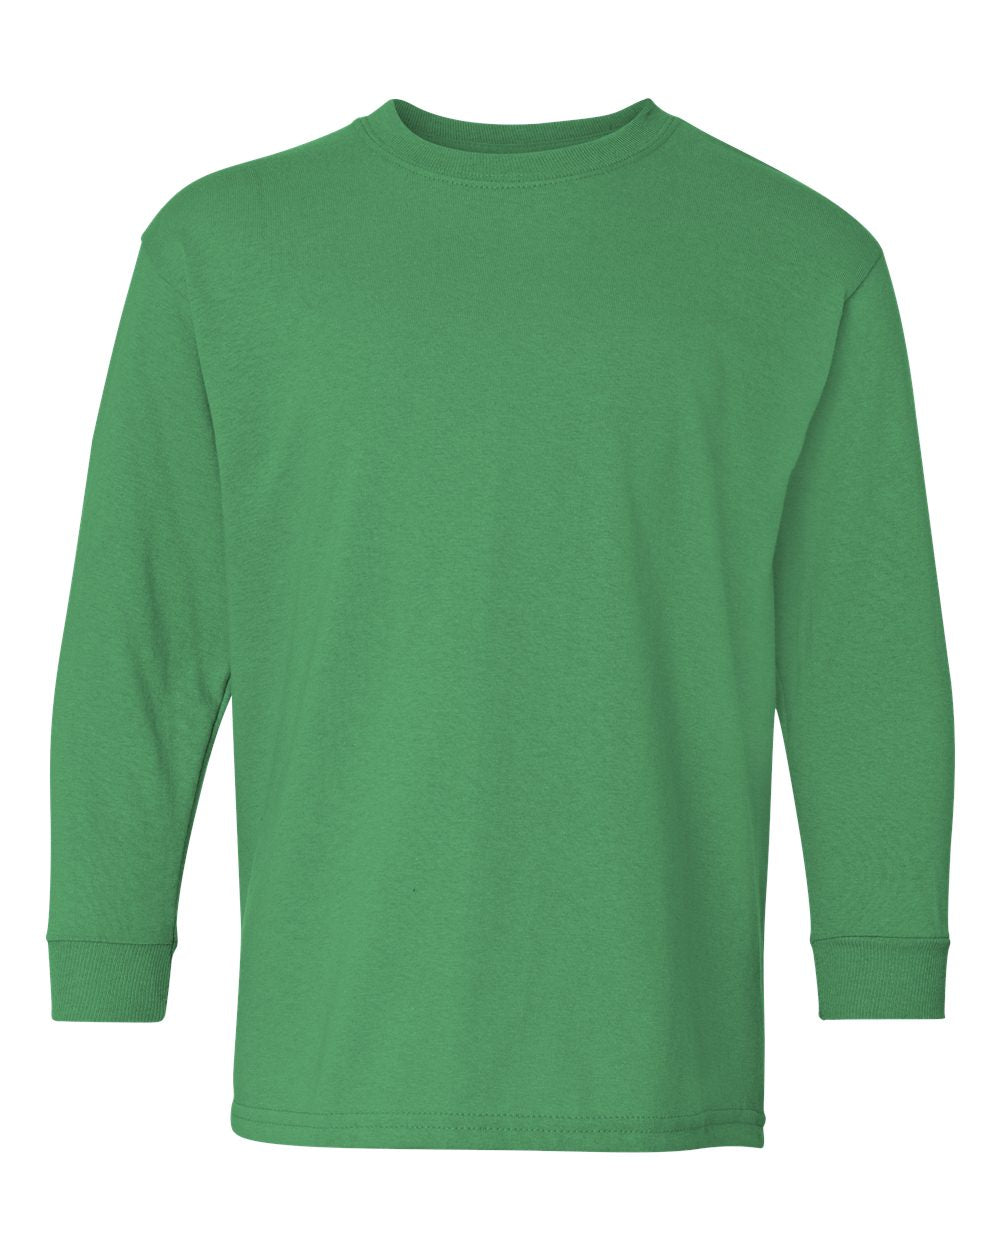 Gildan Youth Long Sleeve (5400b) in Irish Green